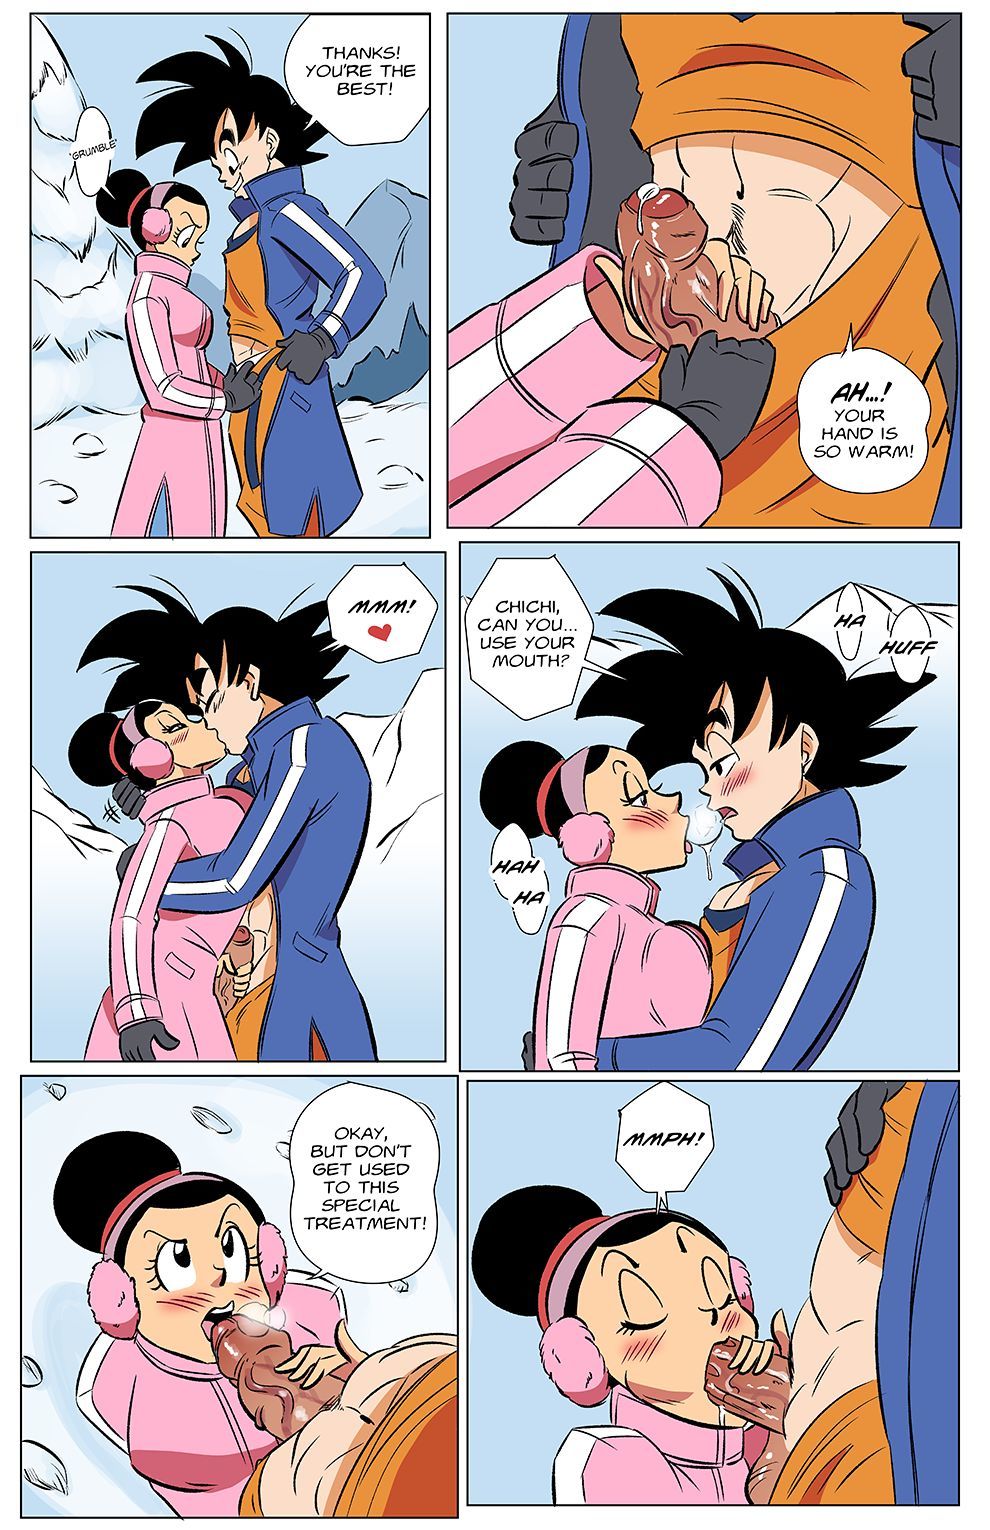 Goku+Chichi Heating Up (Dragon Ball Super) by FunsexyDB page 3